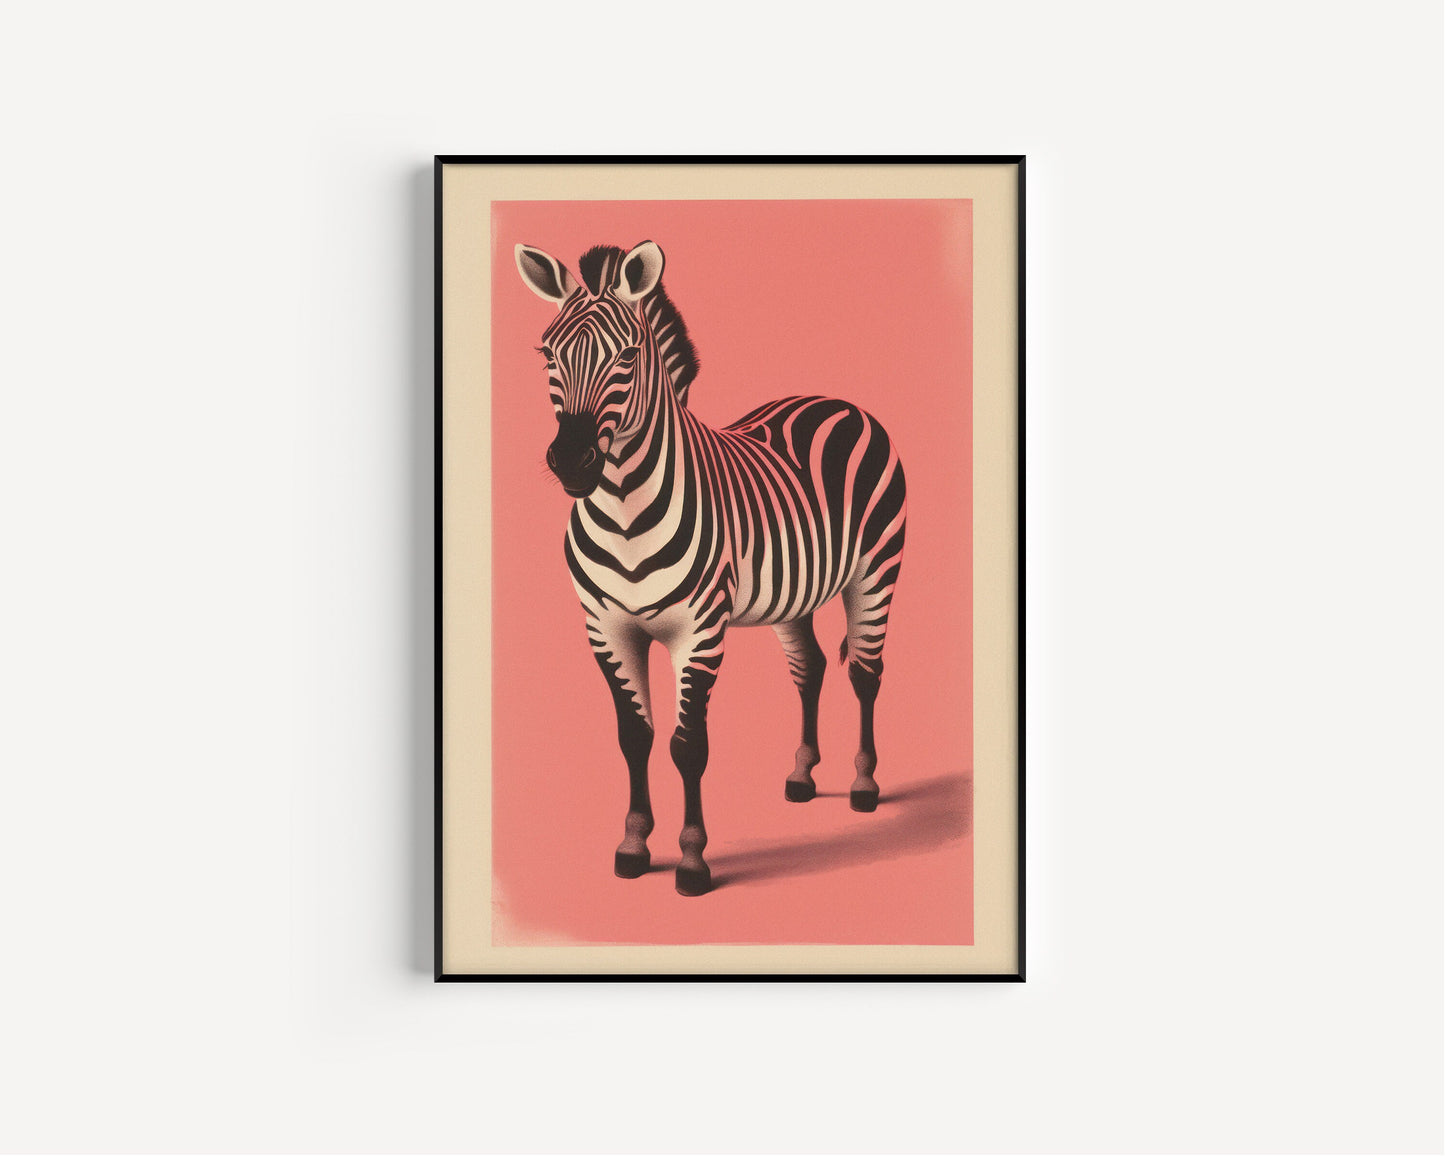 Zebra on Pink Background Print, Maximalist Animal Wall Art, Tropical Boho Safari Zebra Prints, Eclectic Jungle Decor, Zebra Prints